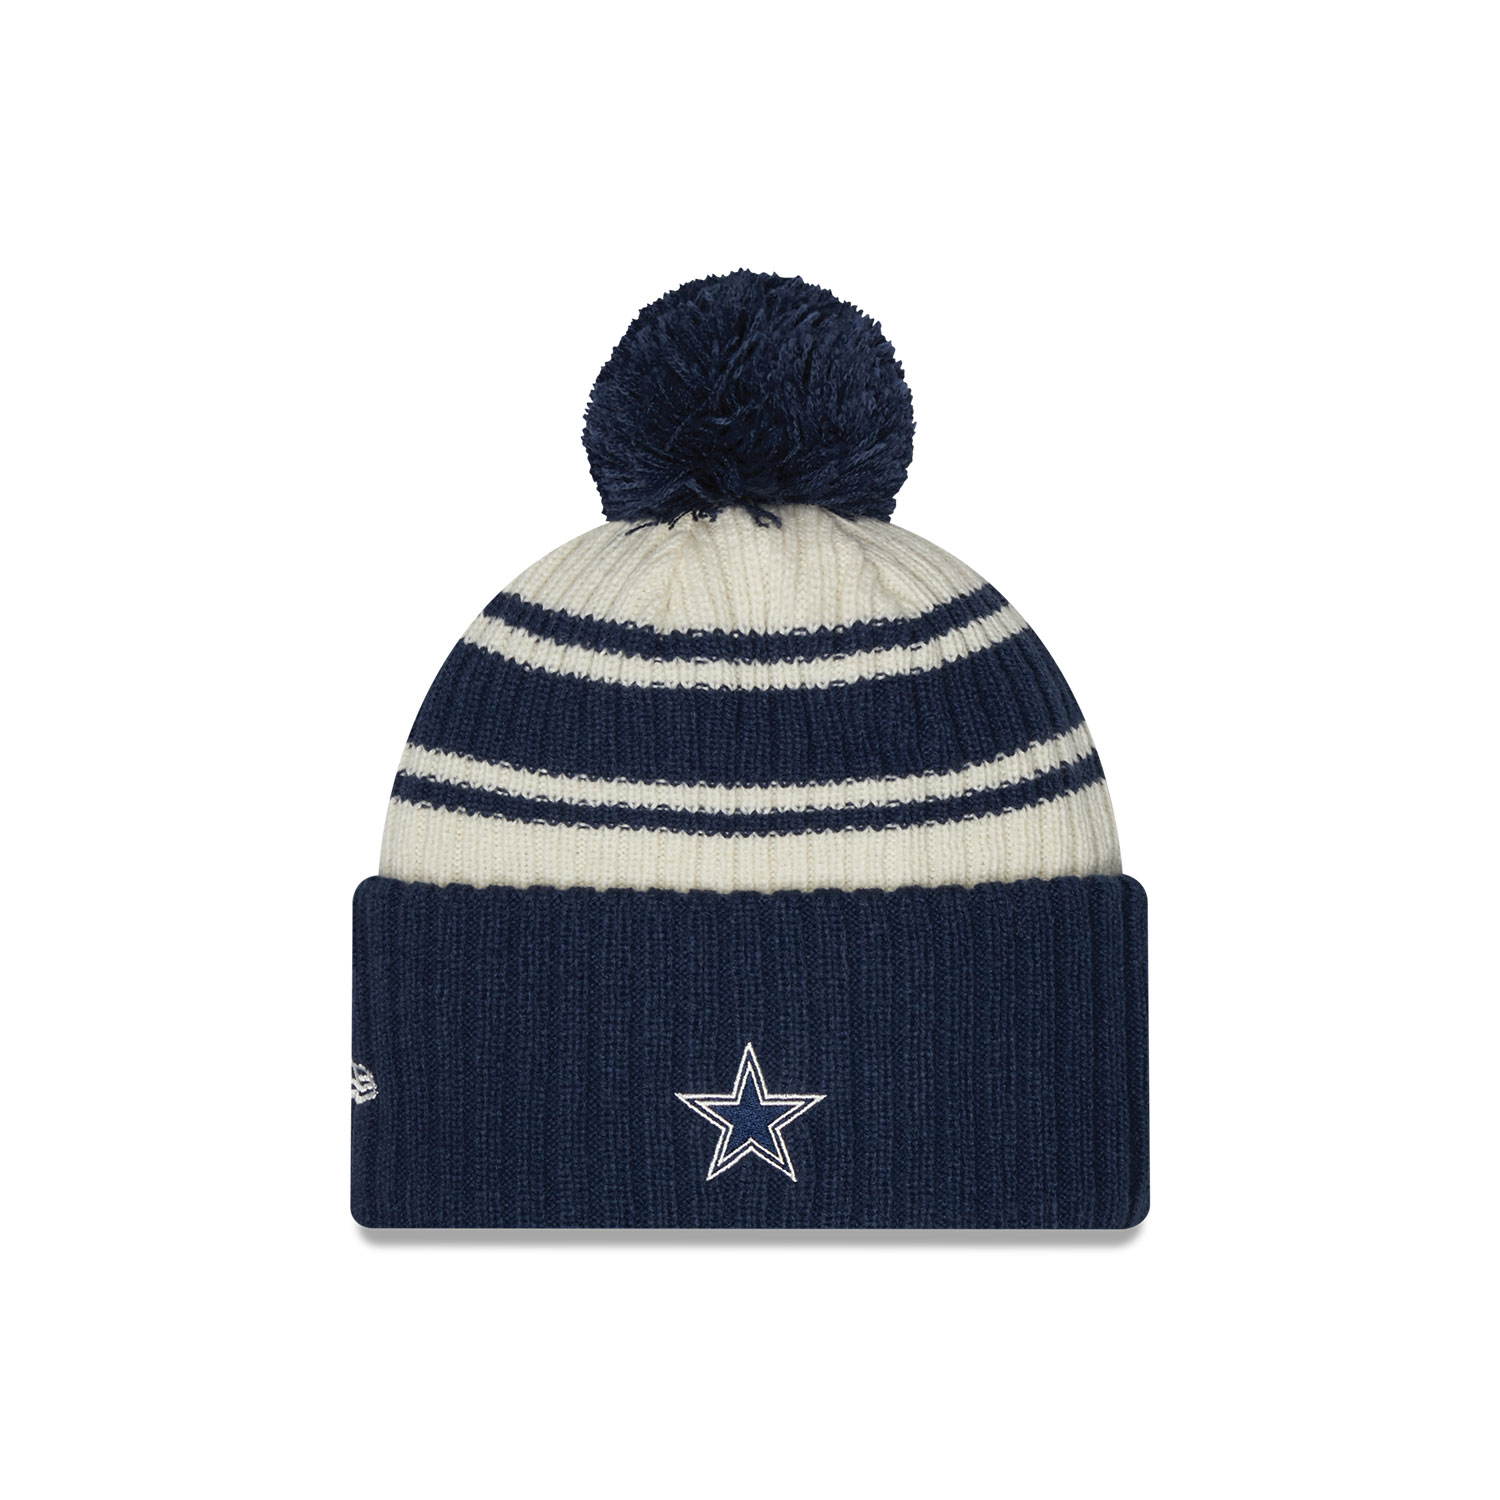 Dallas Cowboys NFL Sideline Navy Beanie Hat